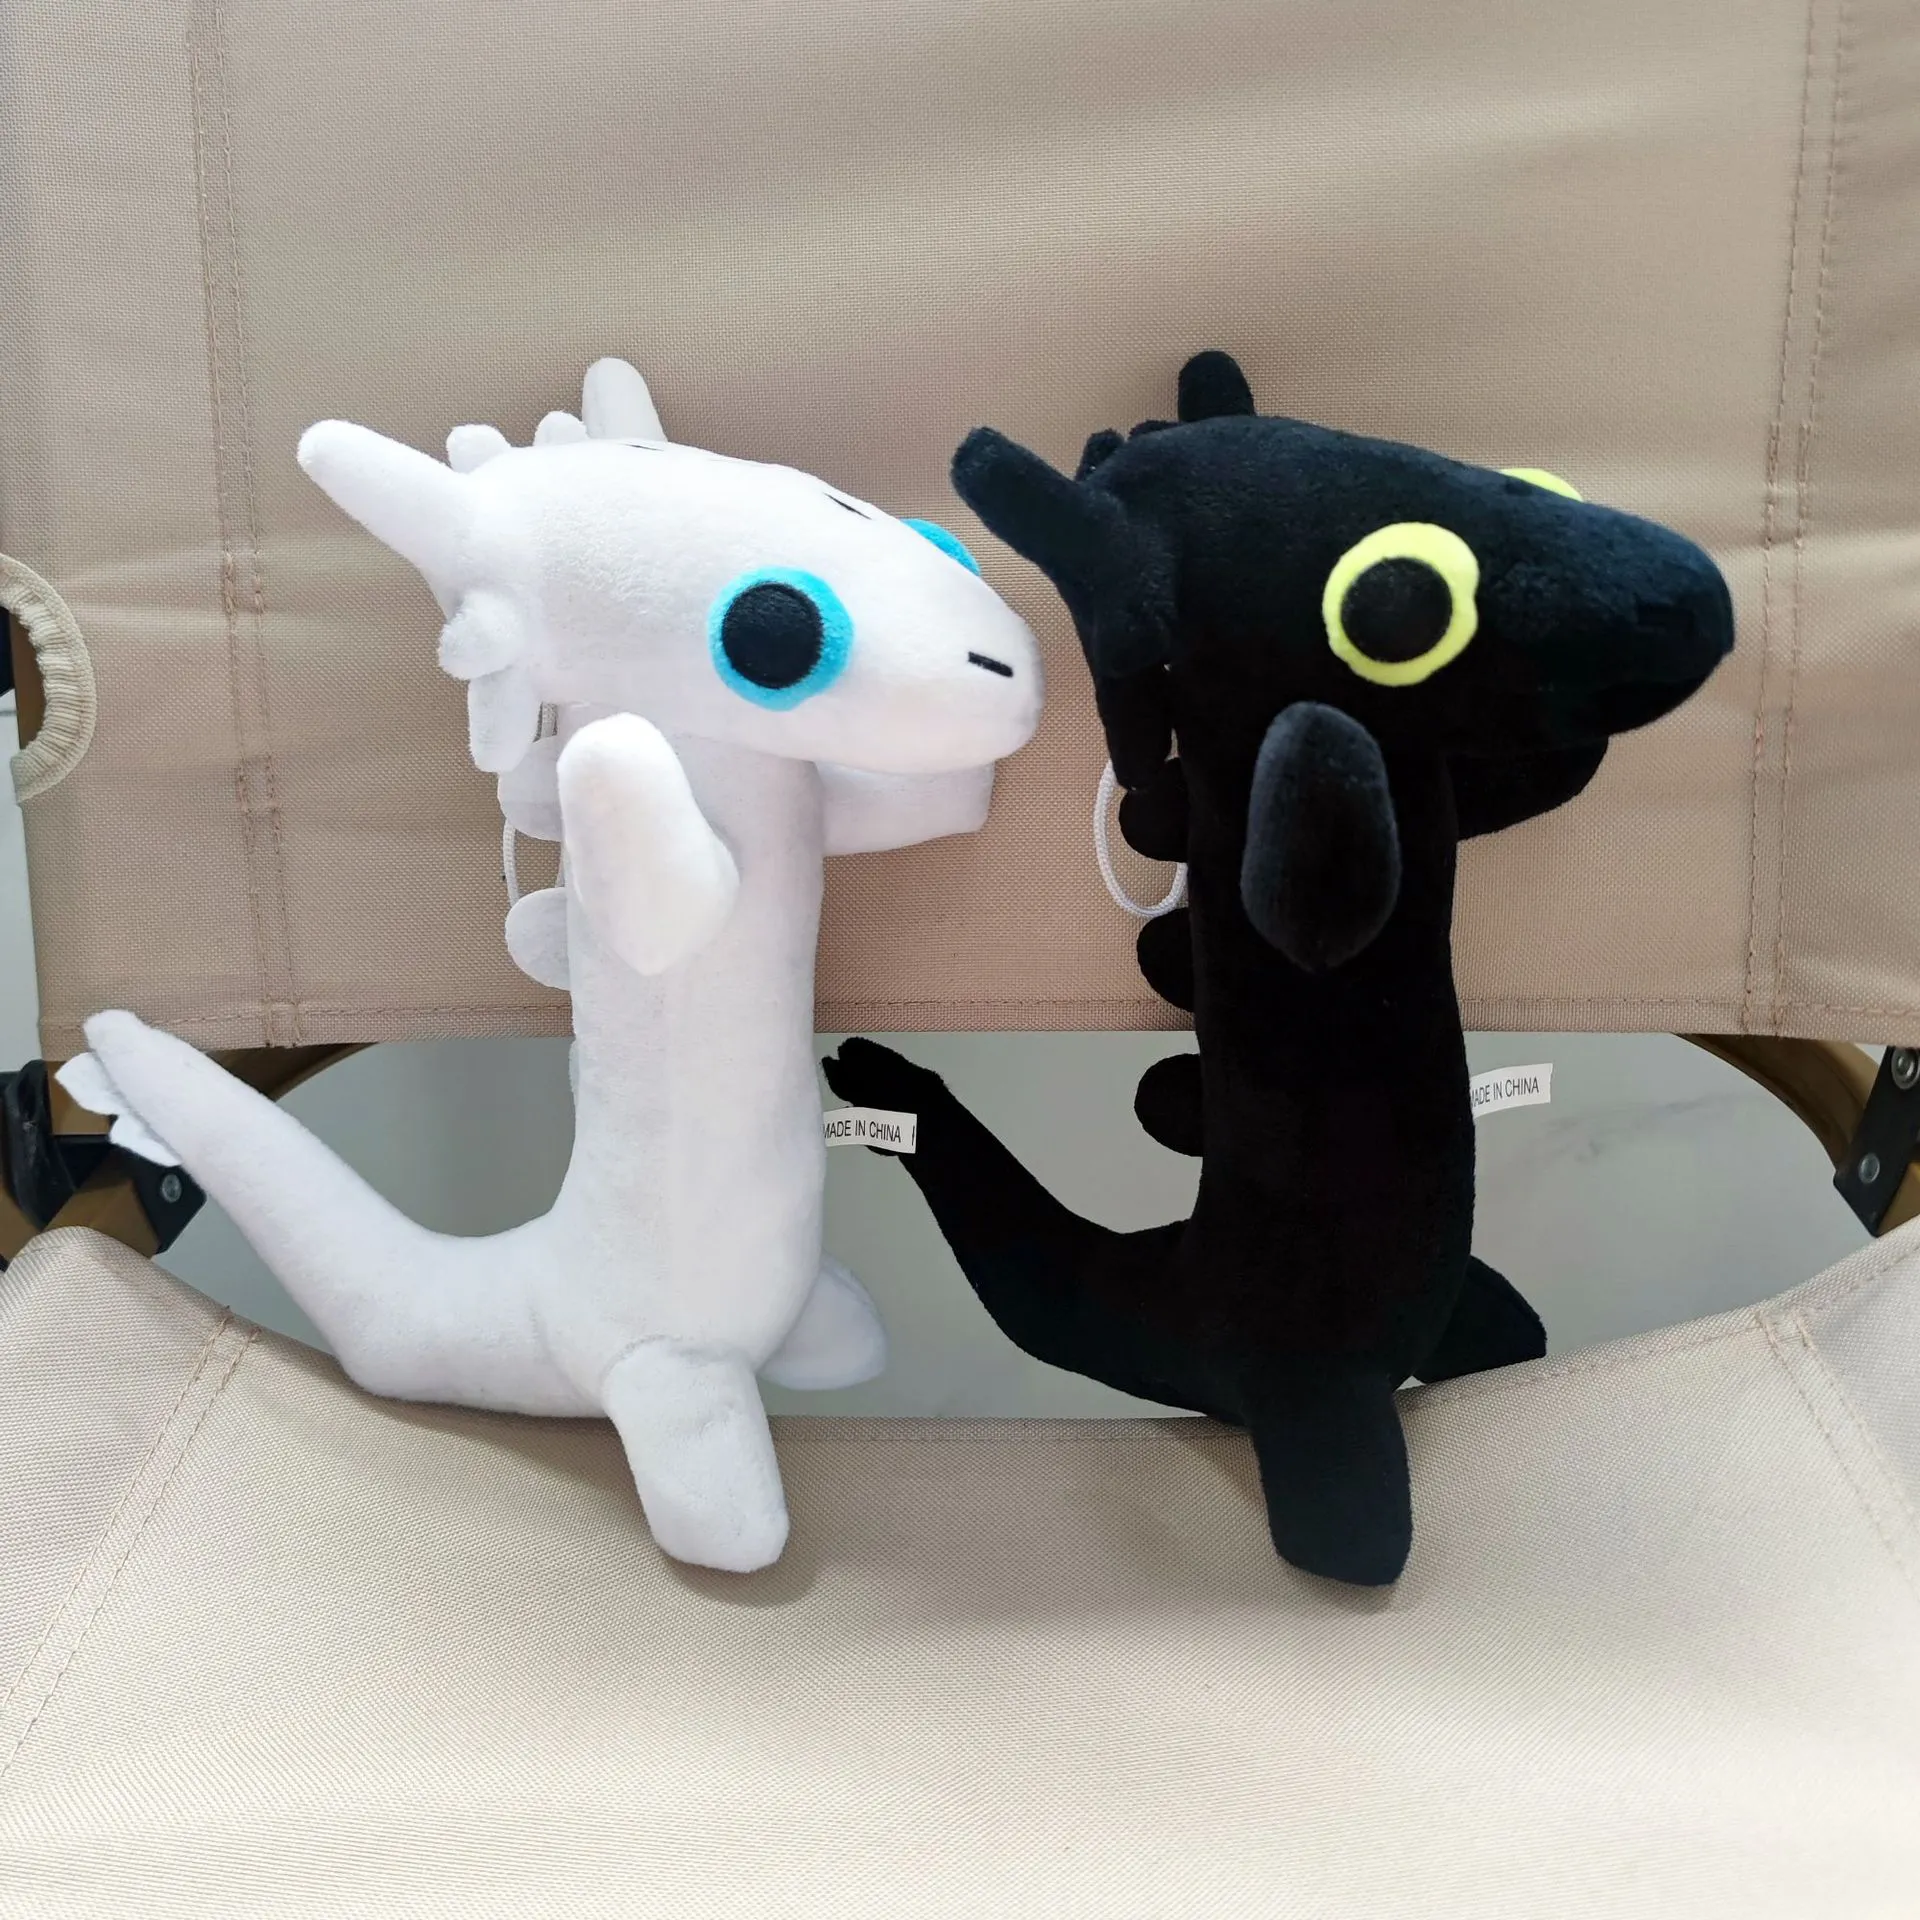 Toothless Dancing Meme Plush Toy Dancing Dragon Stuffed Soft Animals Plushies 25cm Doll Anime Game Room Pillow Decora Kid Gift